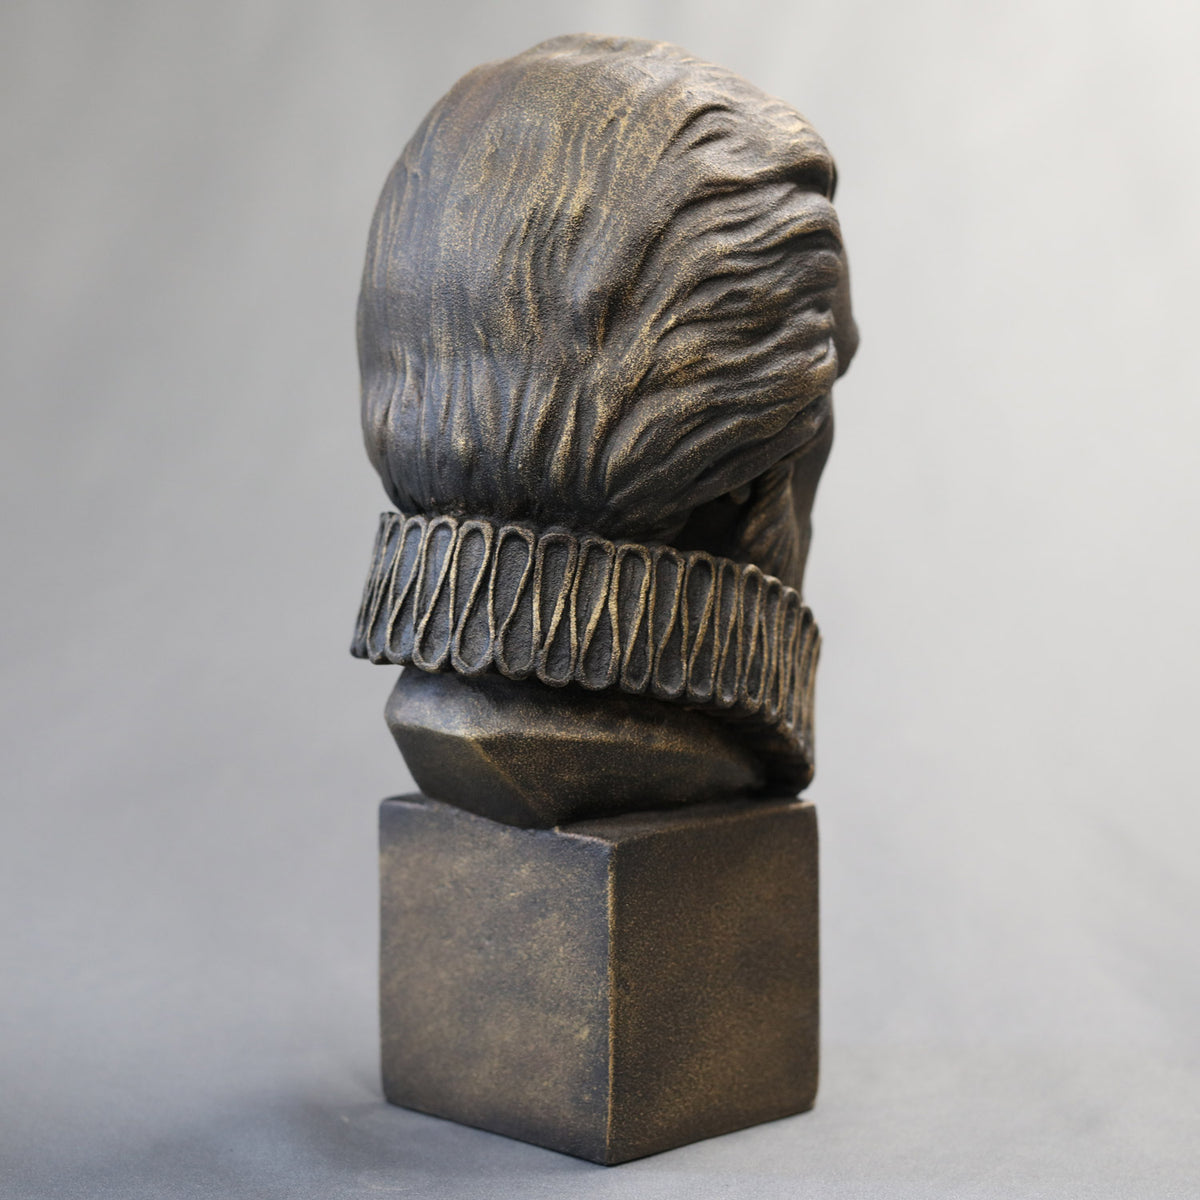 Cipriano de Valera - Sculpture